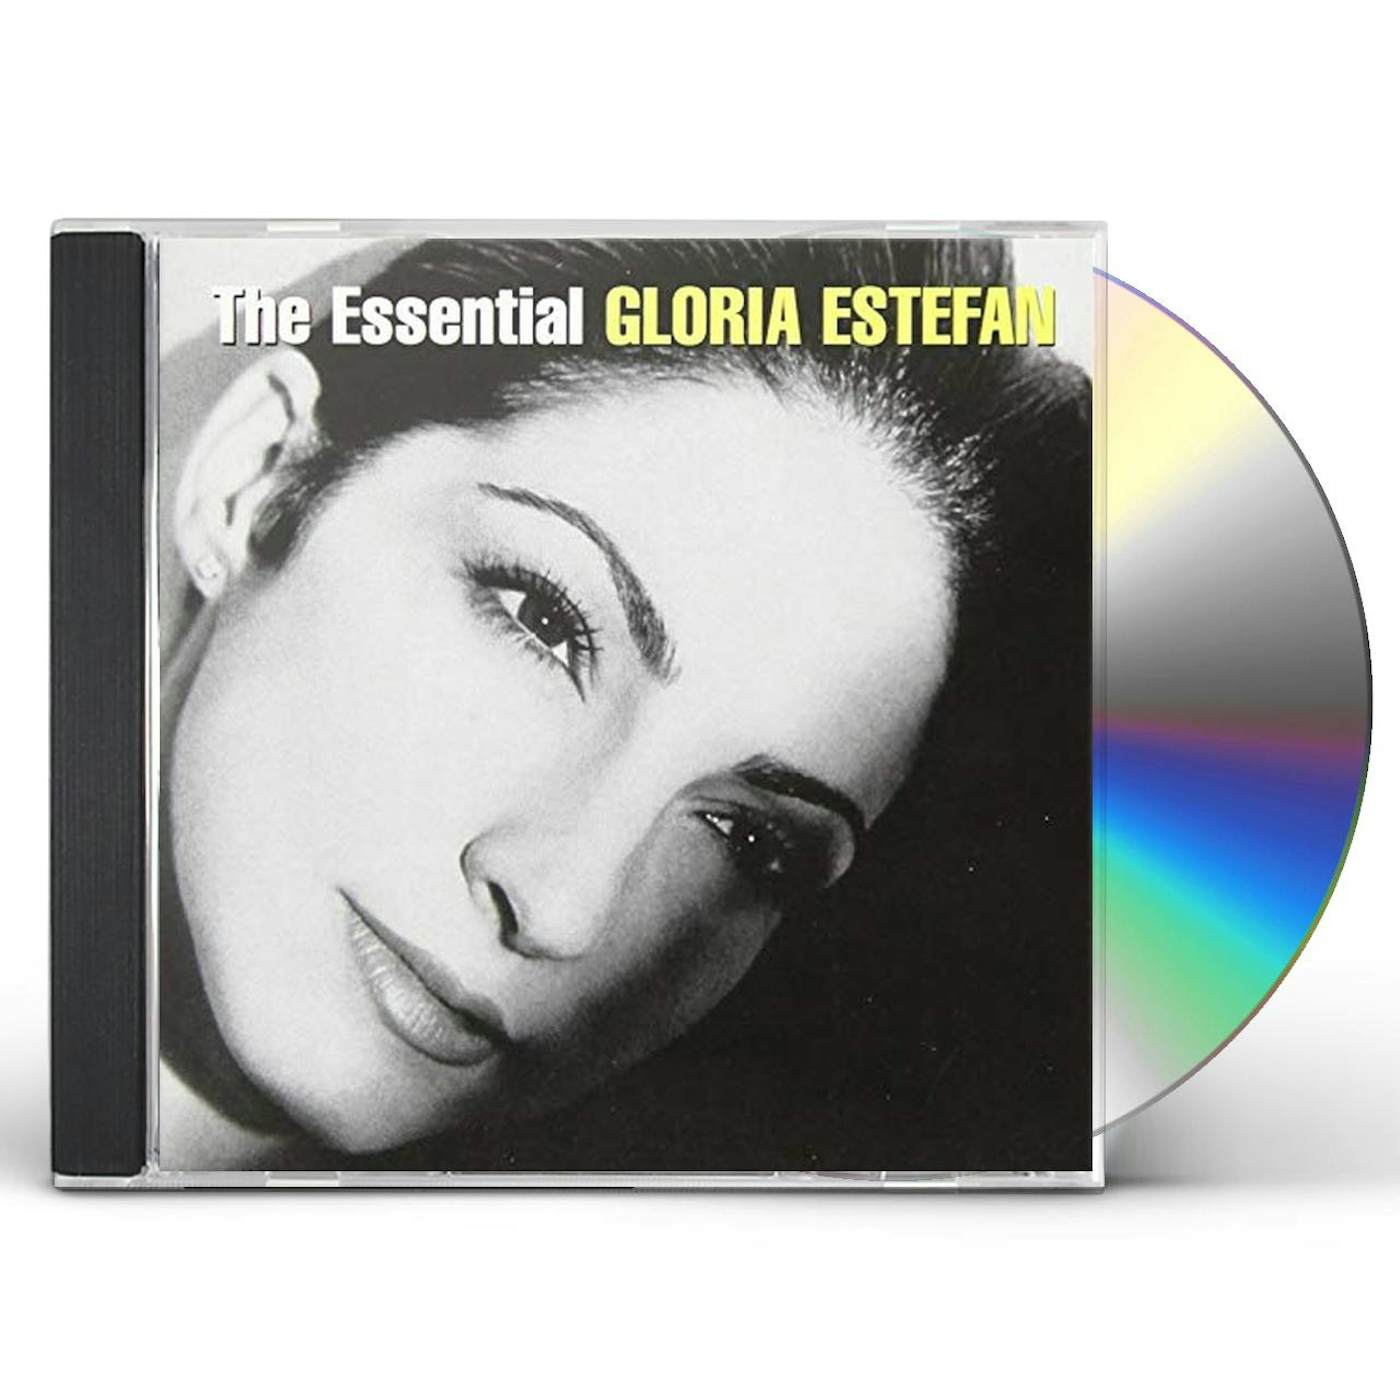 ESSENTIAL GLORIA ESTEFAN (GOLD SERIES) CD